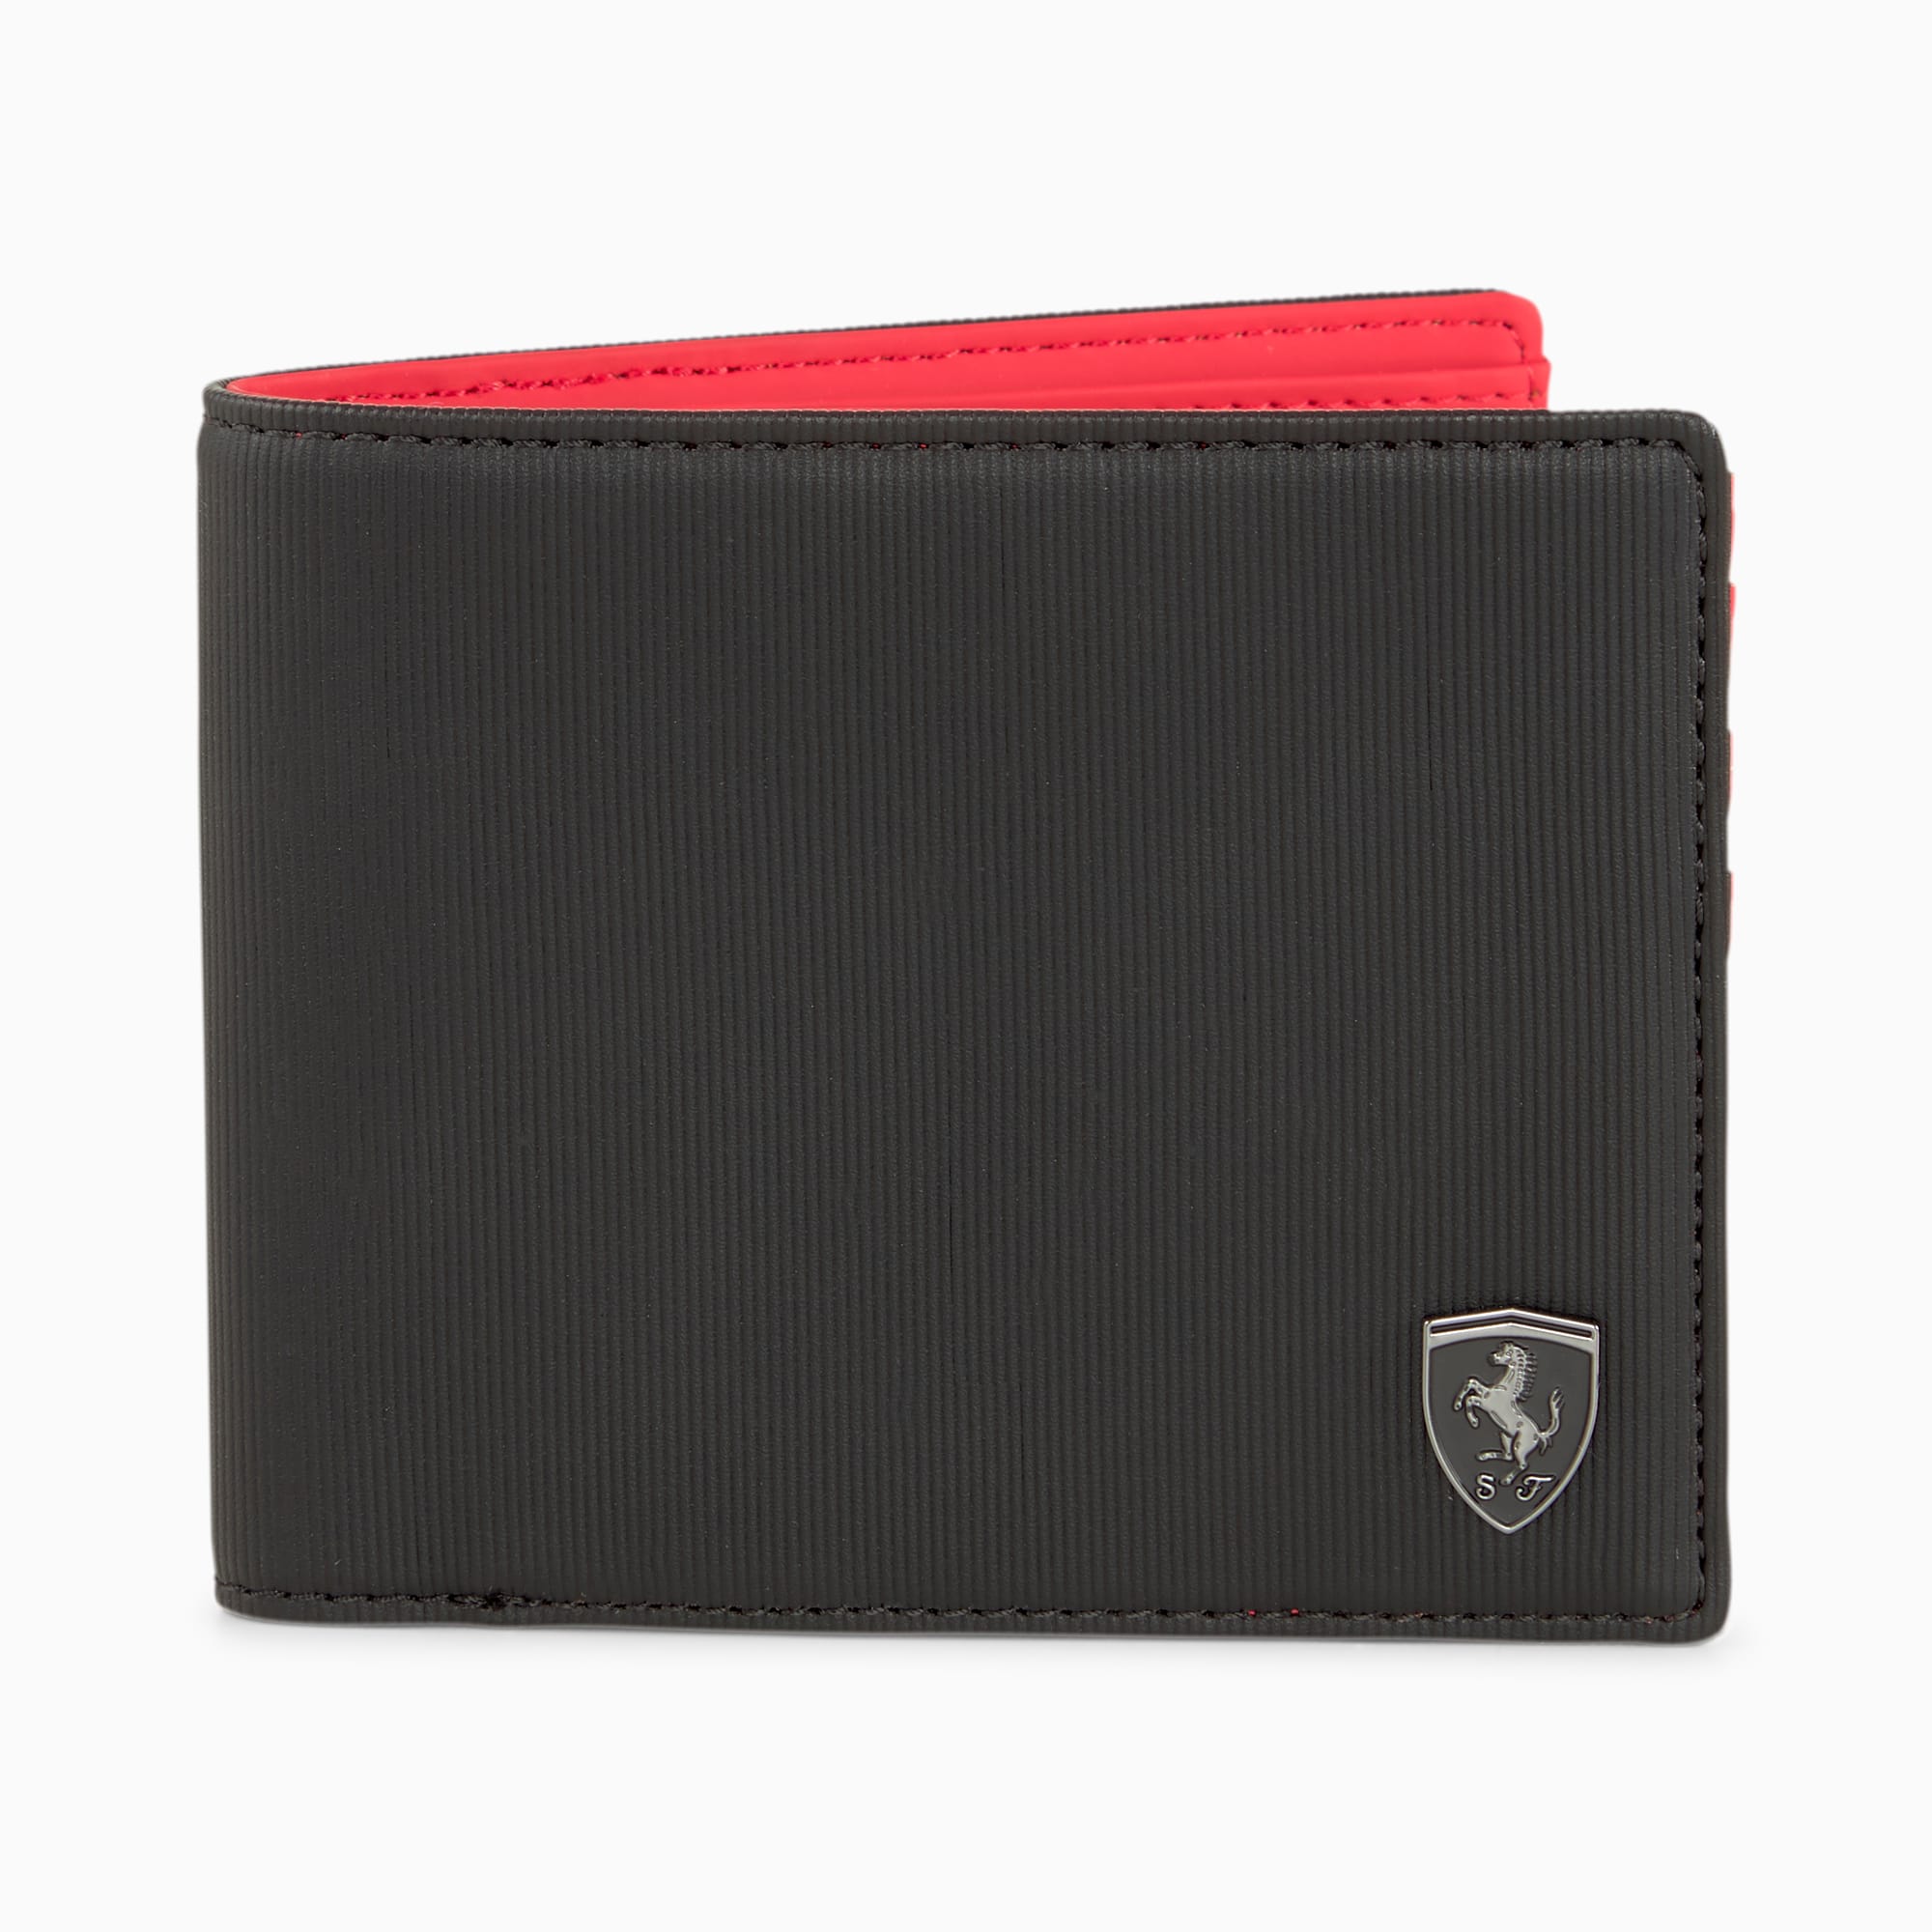 ferrari wallet red colour